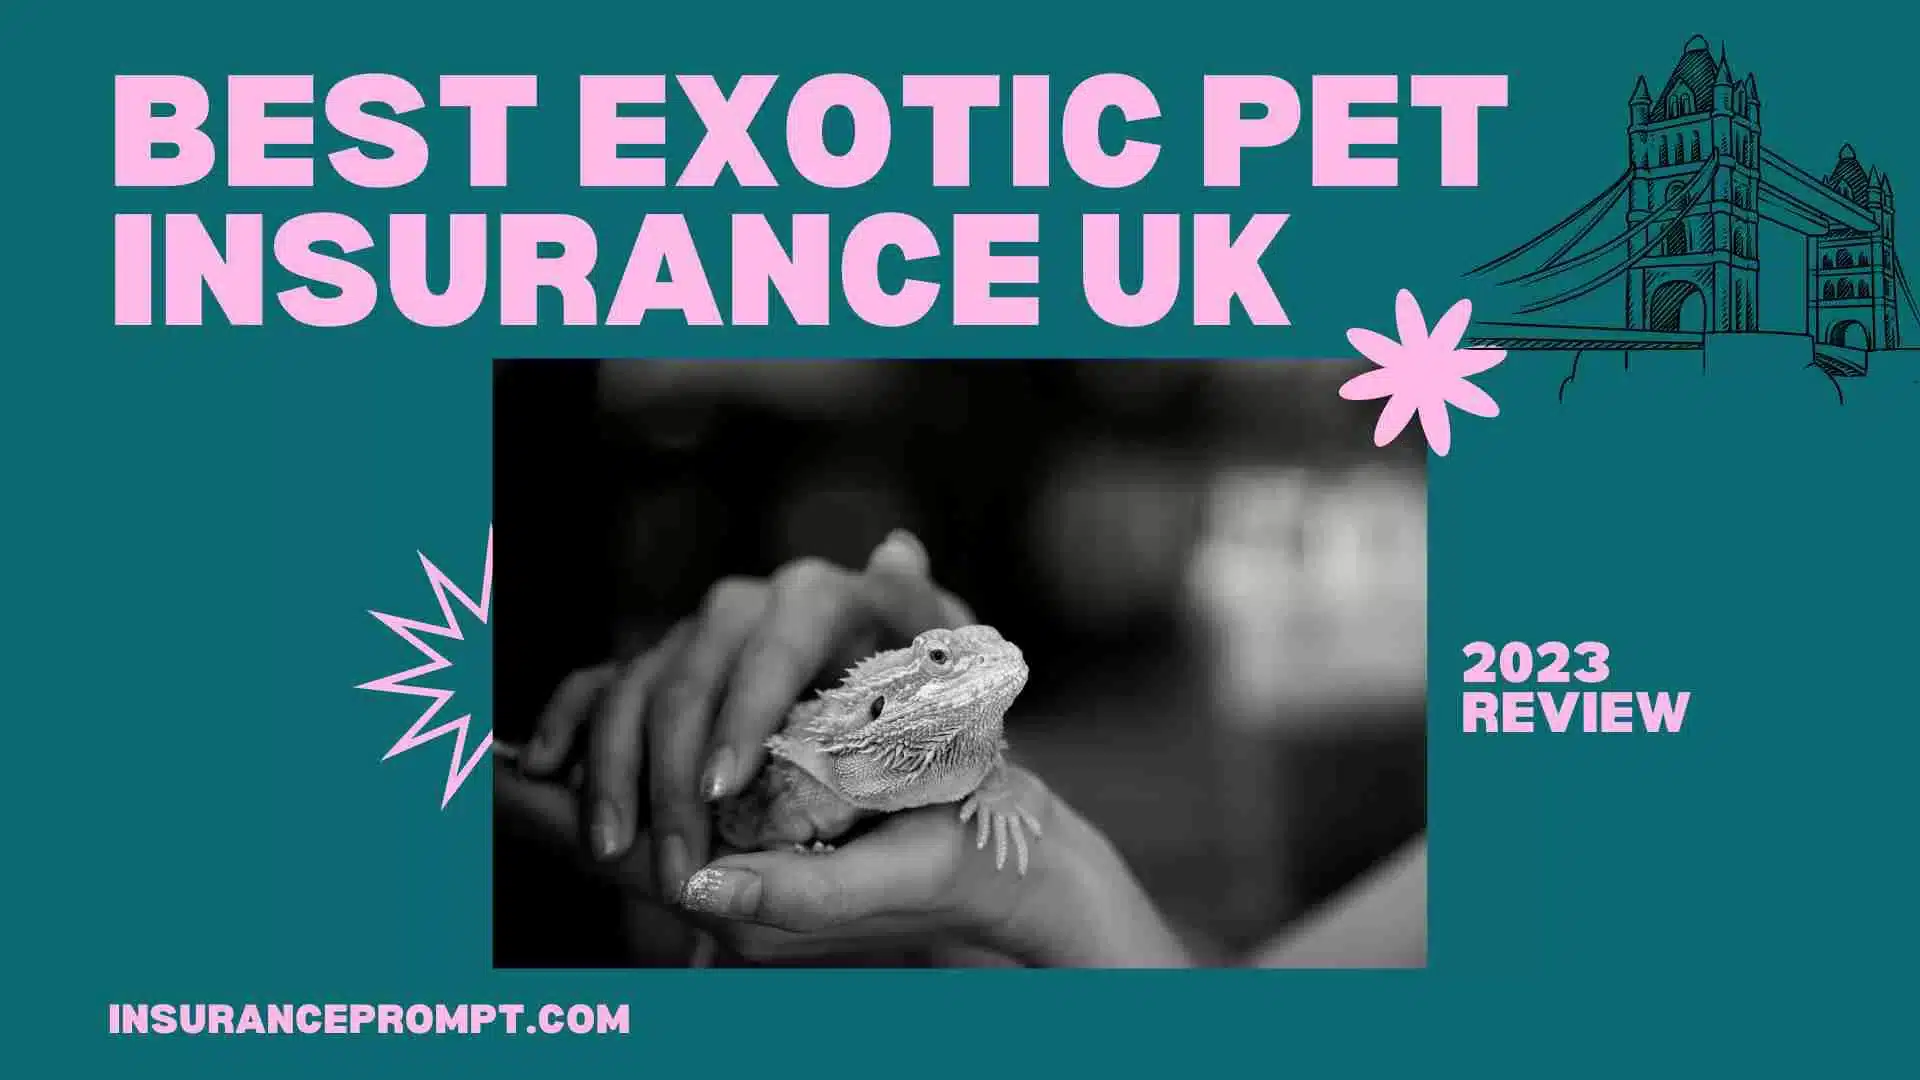 Best Exotic Pet Insurance Uk (2023 Review)